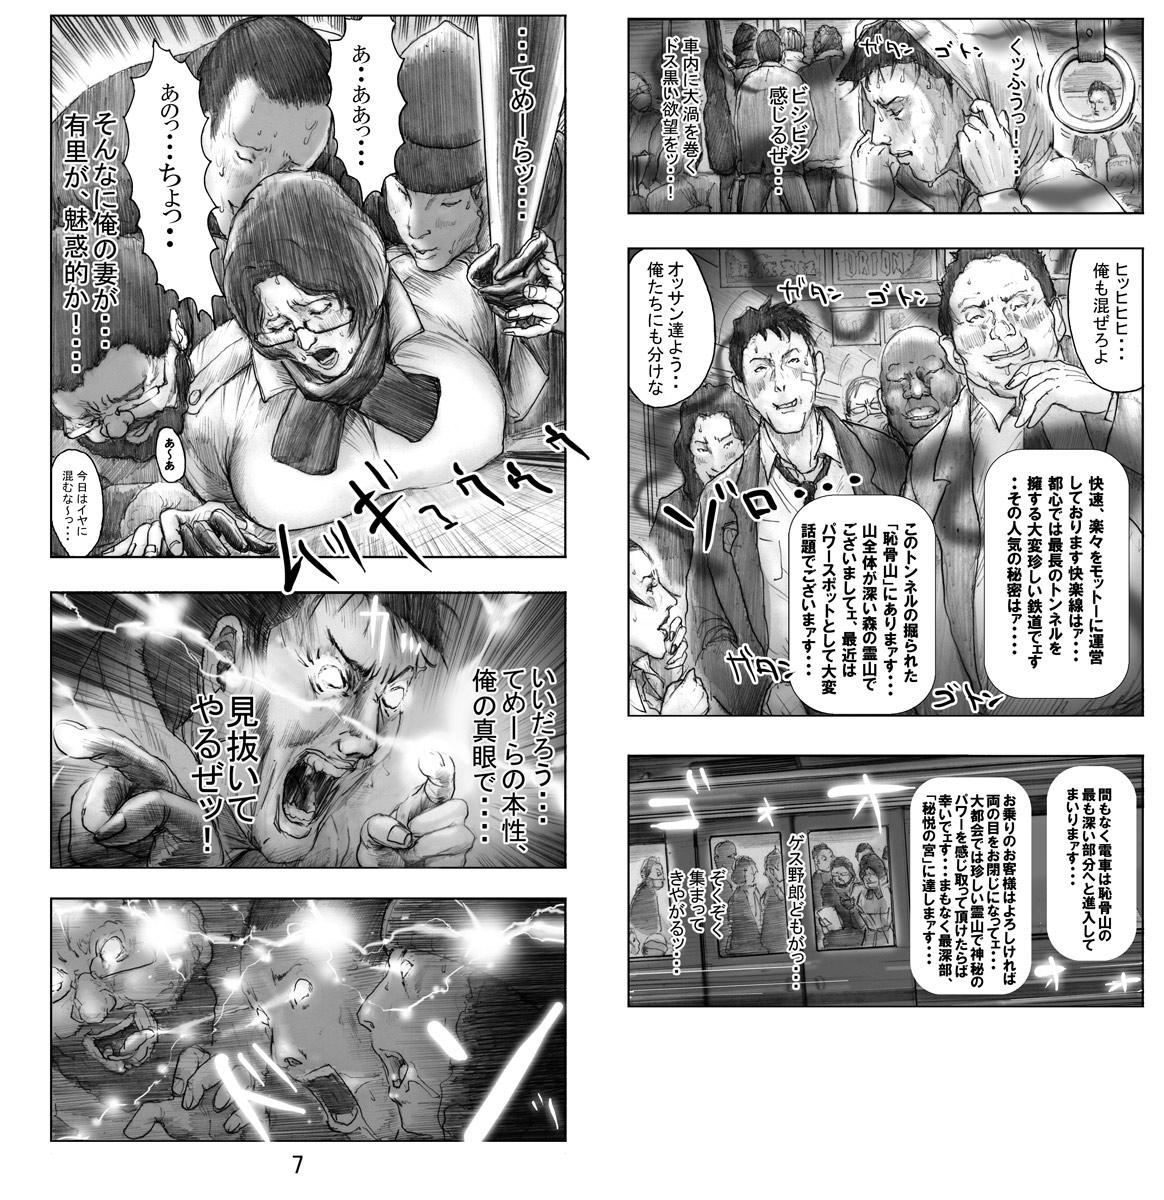 Spooning Utsukushii no Shingen Part 6 Home - Page 8